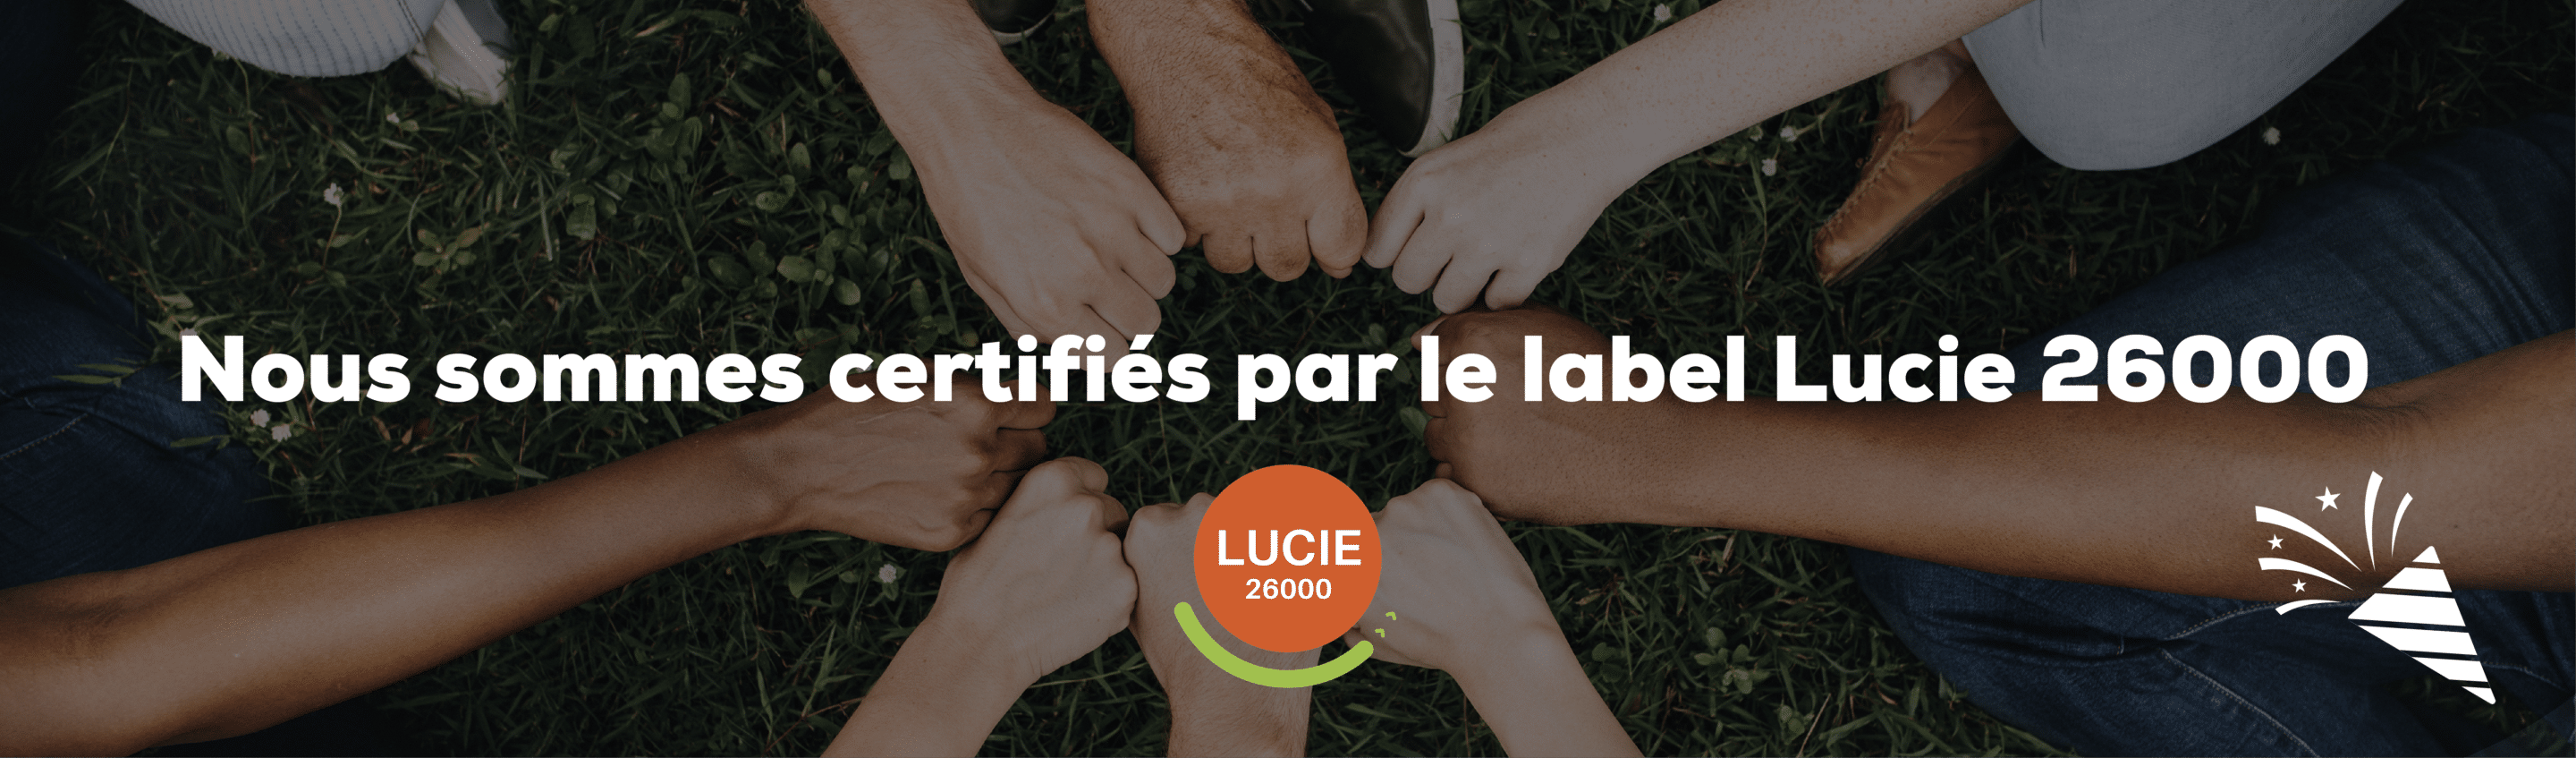 Label Lucie 26000